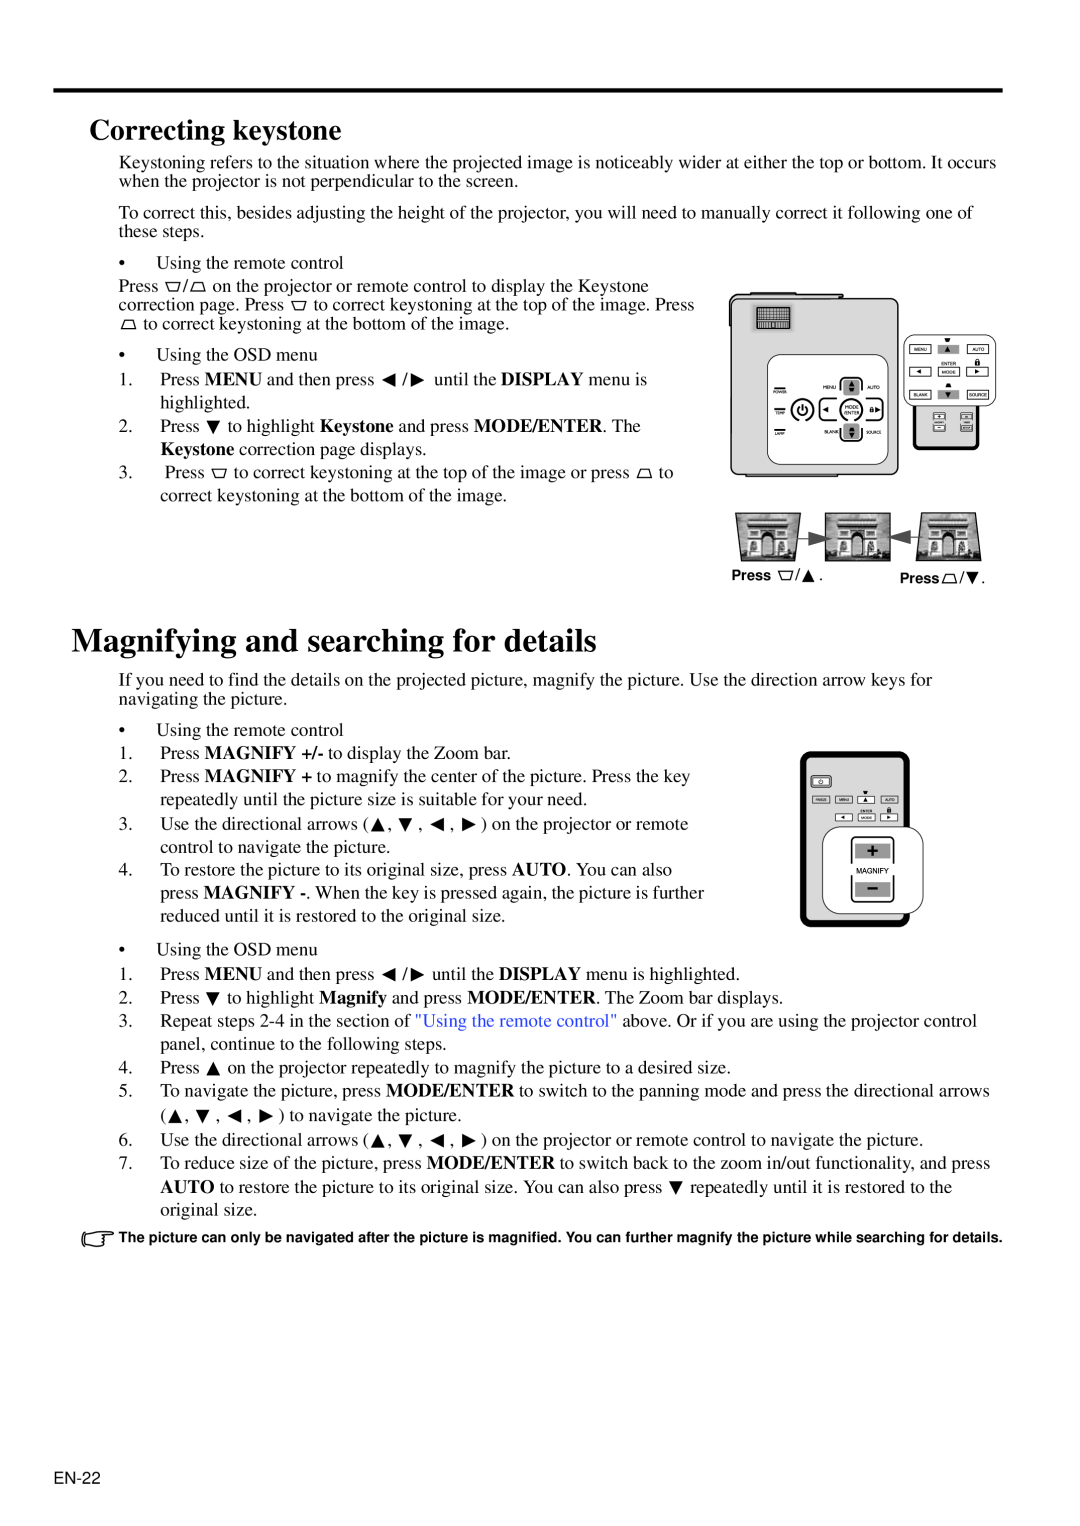 Mitsubishi Electronics XD95U user manual Magnifying and searching for details, Correcting keystone 